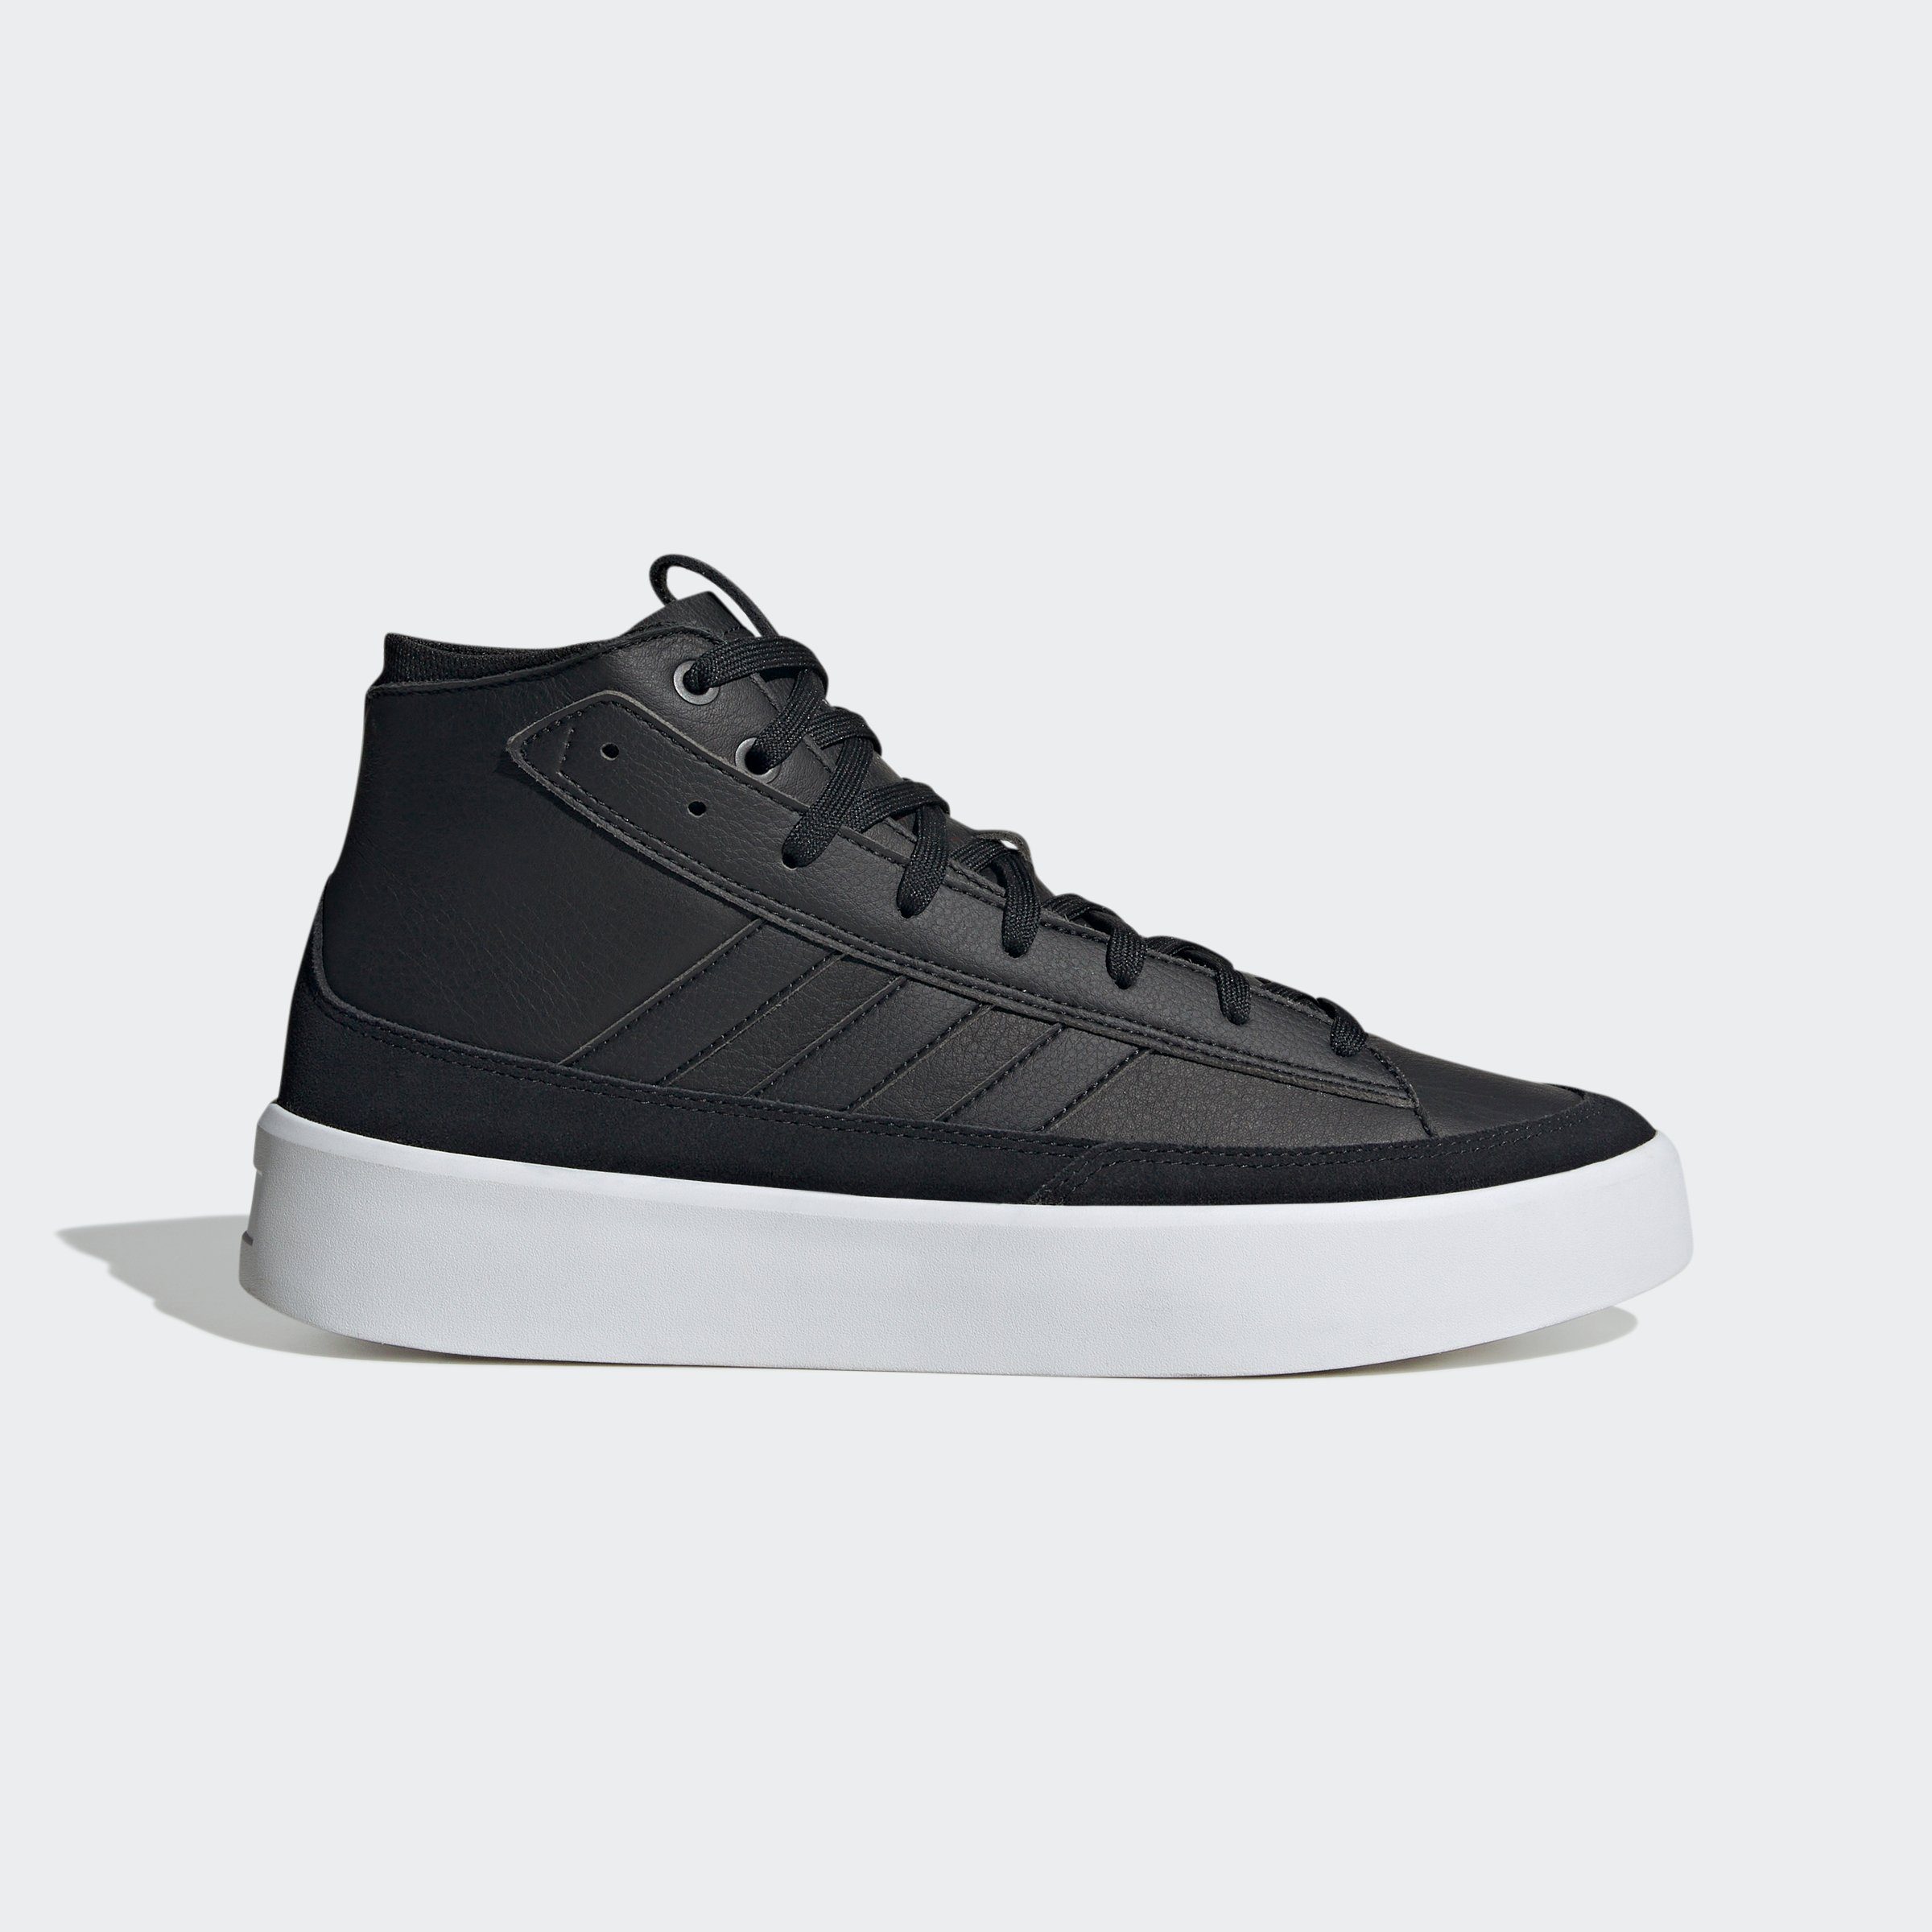 HI Sneaker ZNSORED Sportswear / Six Core / Black Grey Black adidas Core